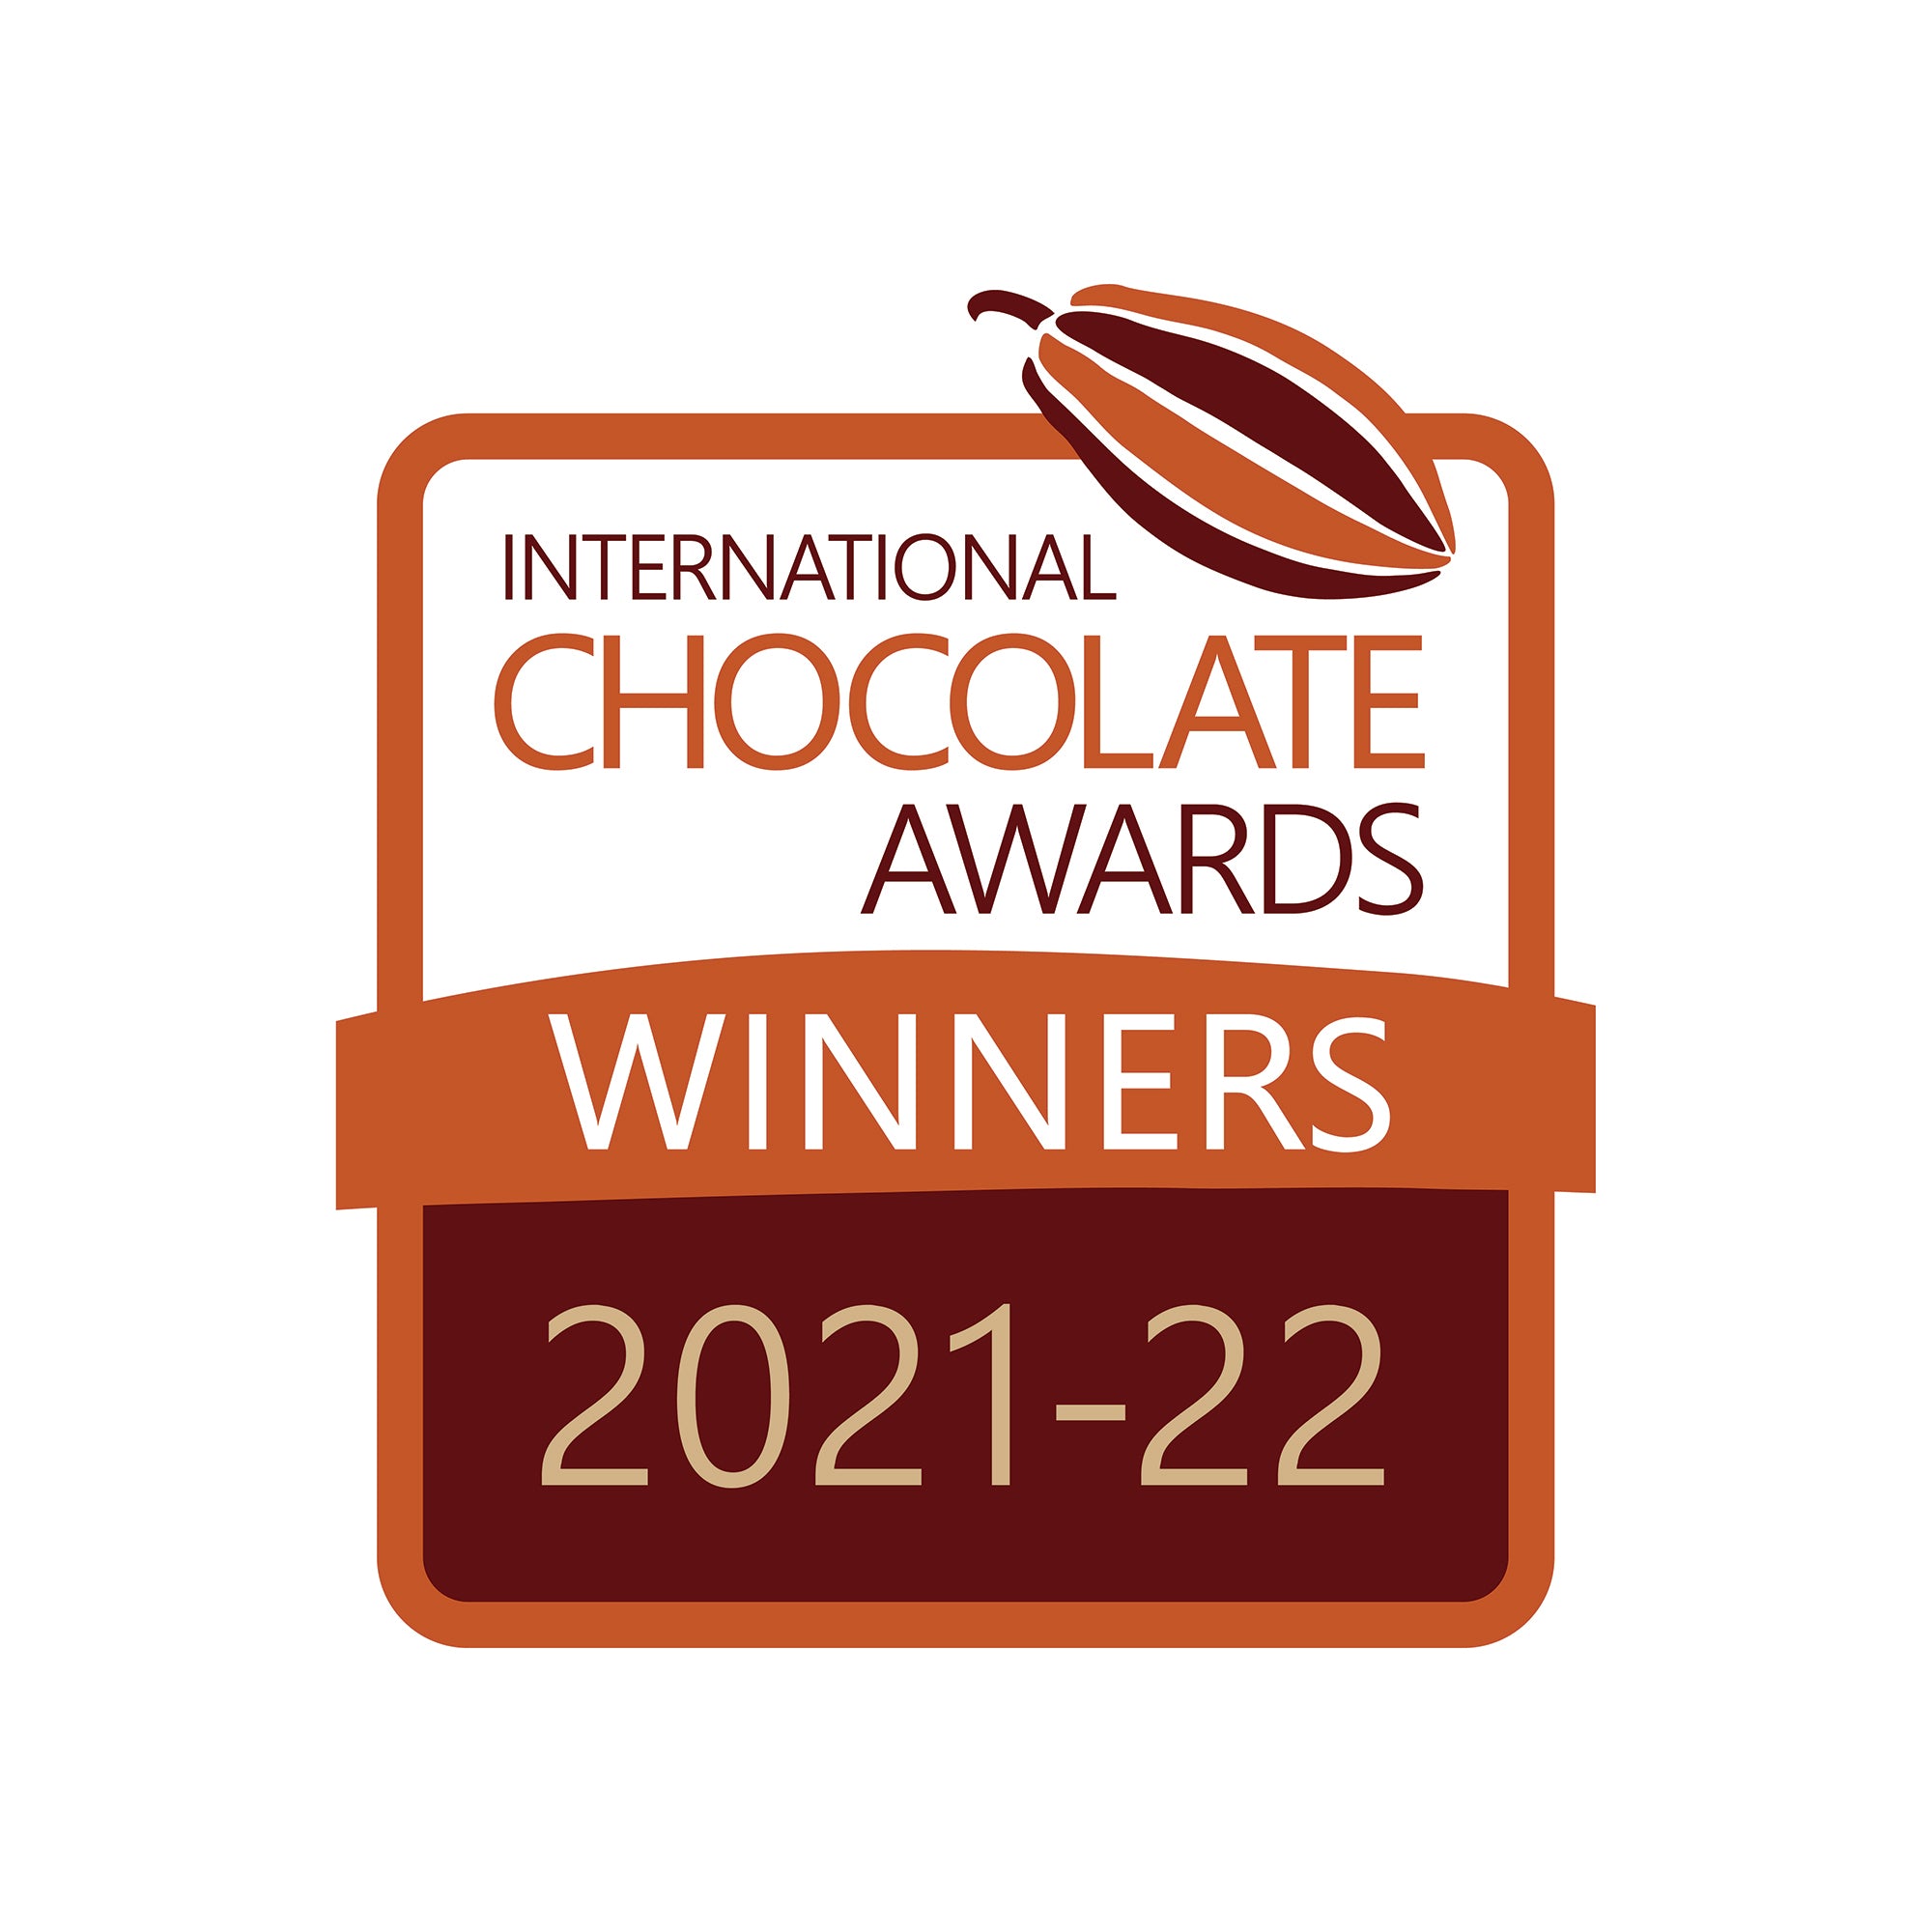 INTERNATIONAL CHOCOLATE AWARDS VICTORS